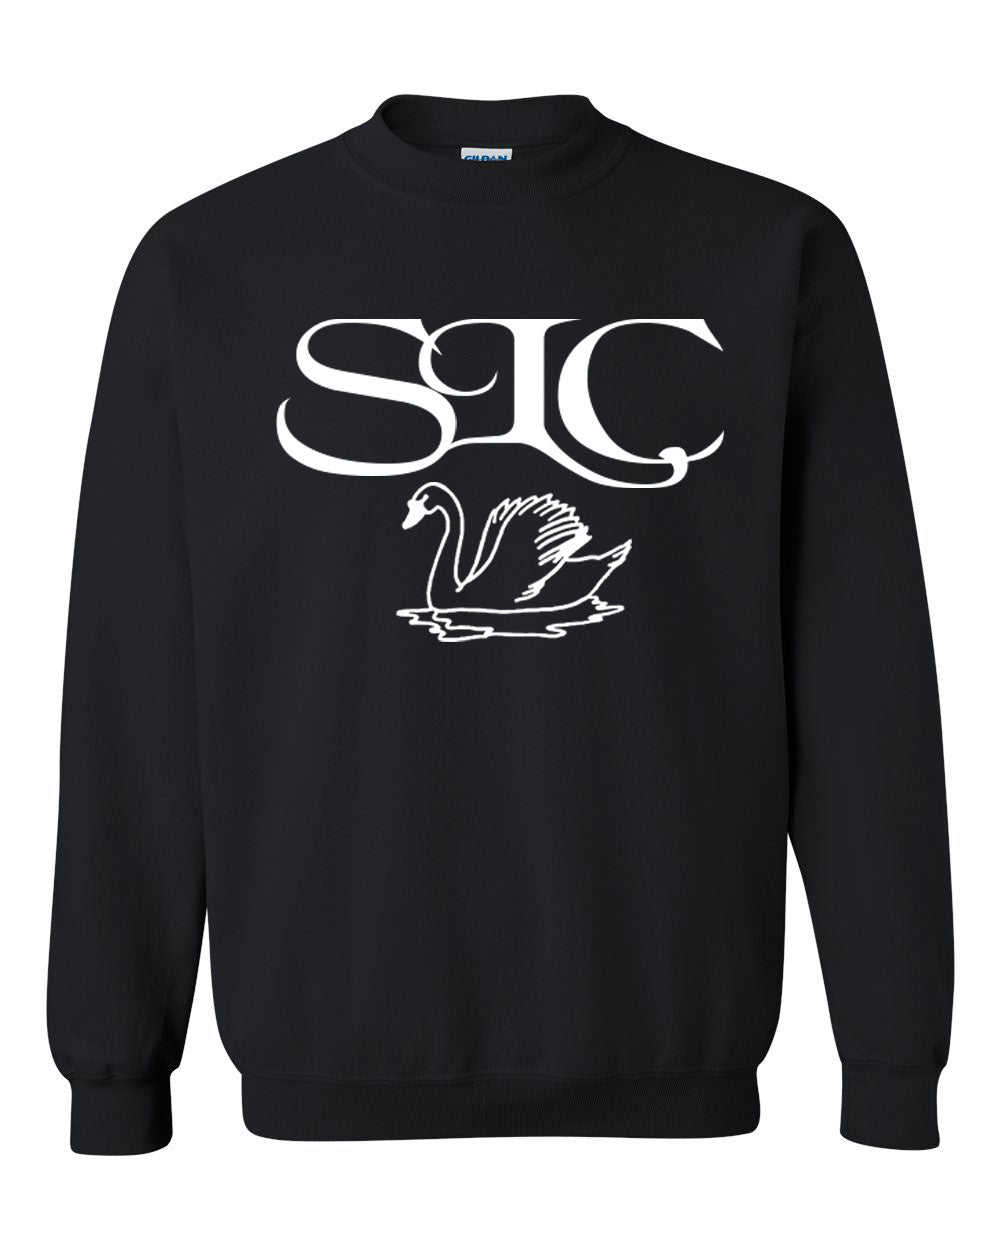 Seneca Lake Design 6 non hooded sweatshirt